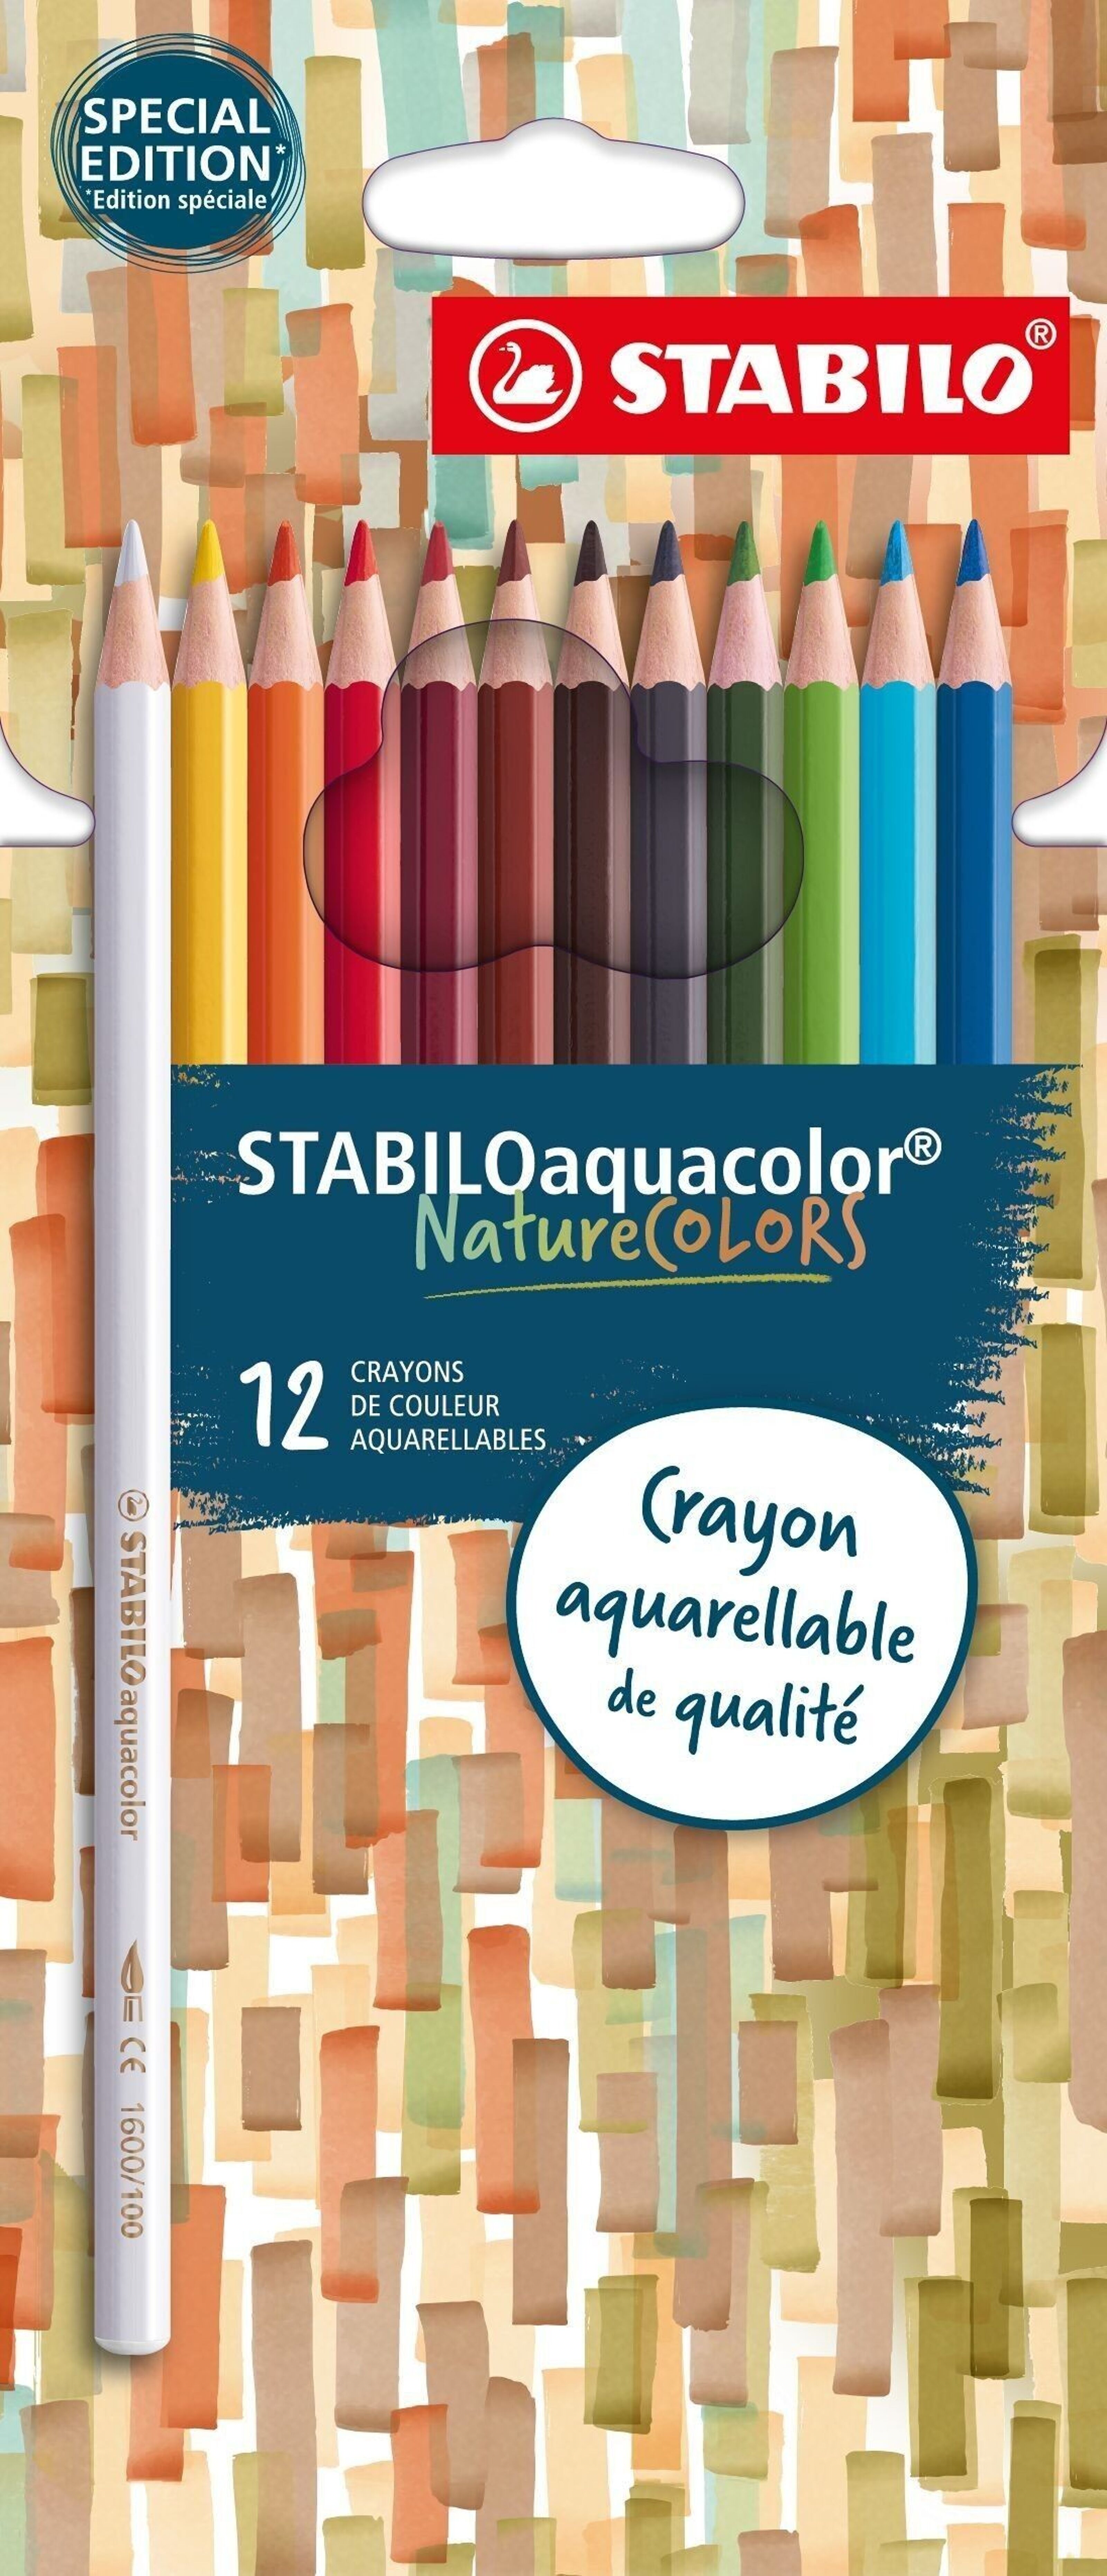 Buy wholesale Cardboard case x 12 STABILOaquacolor Nature colored pencils